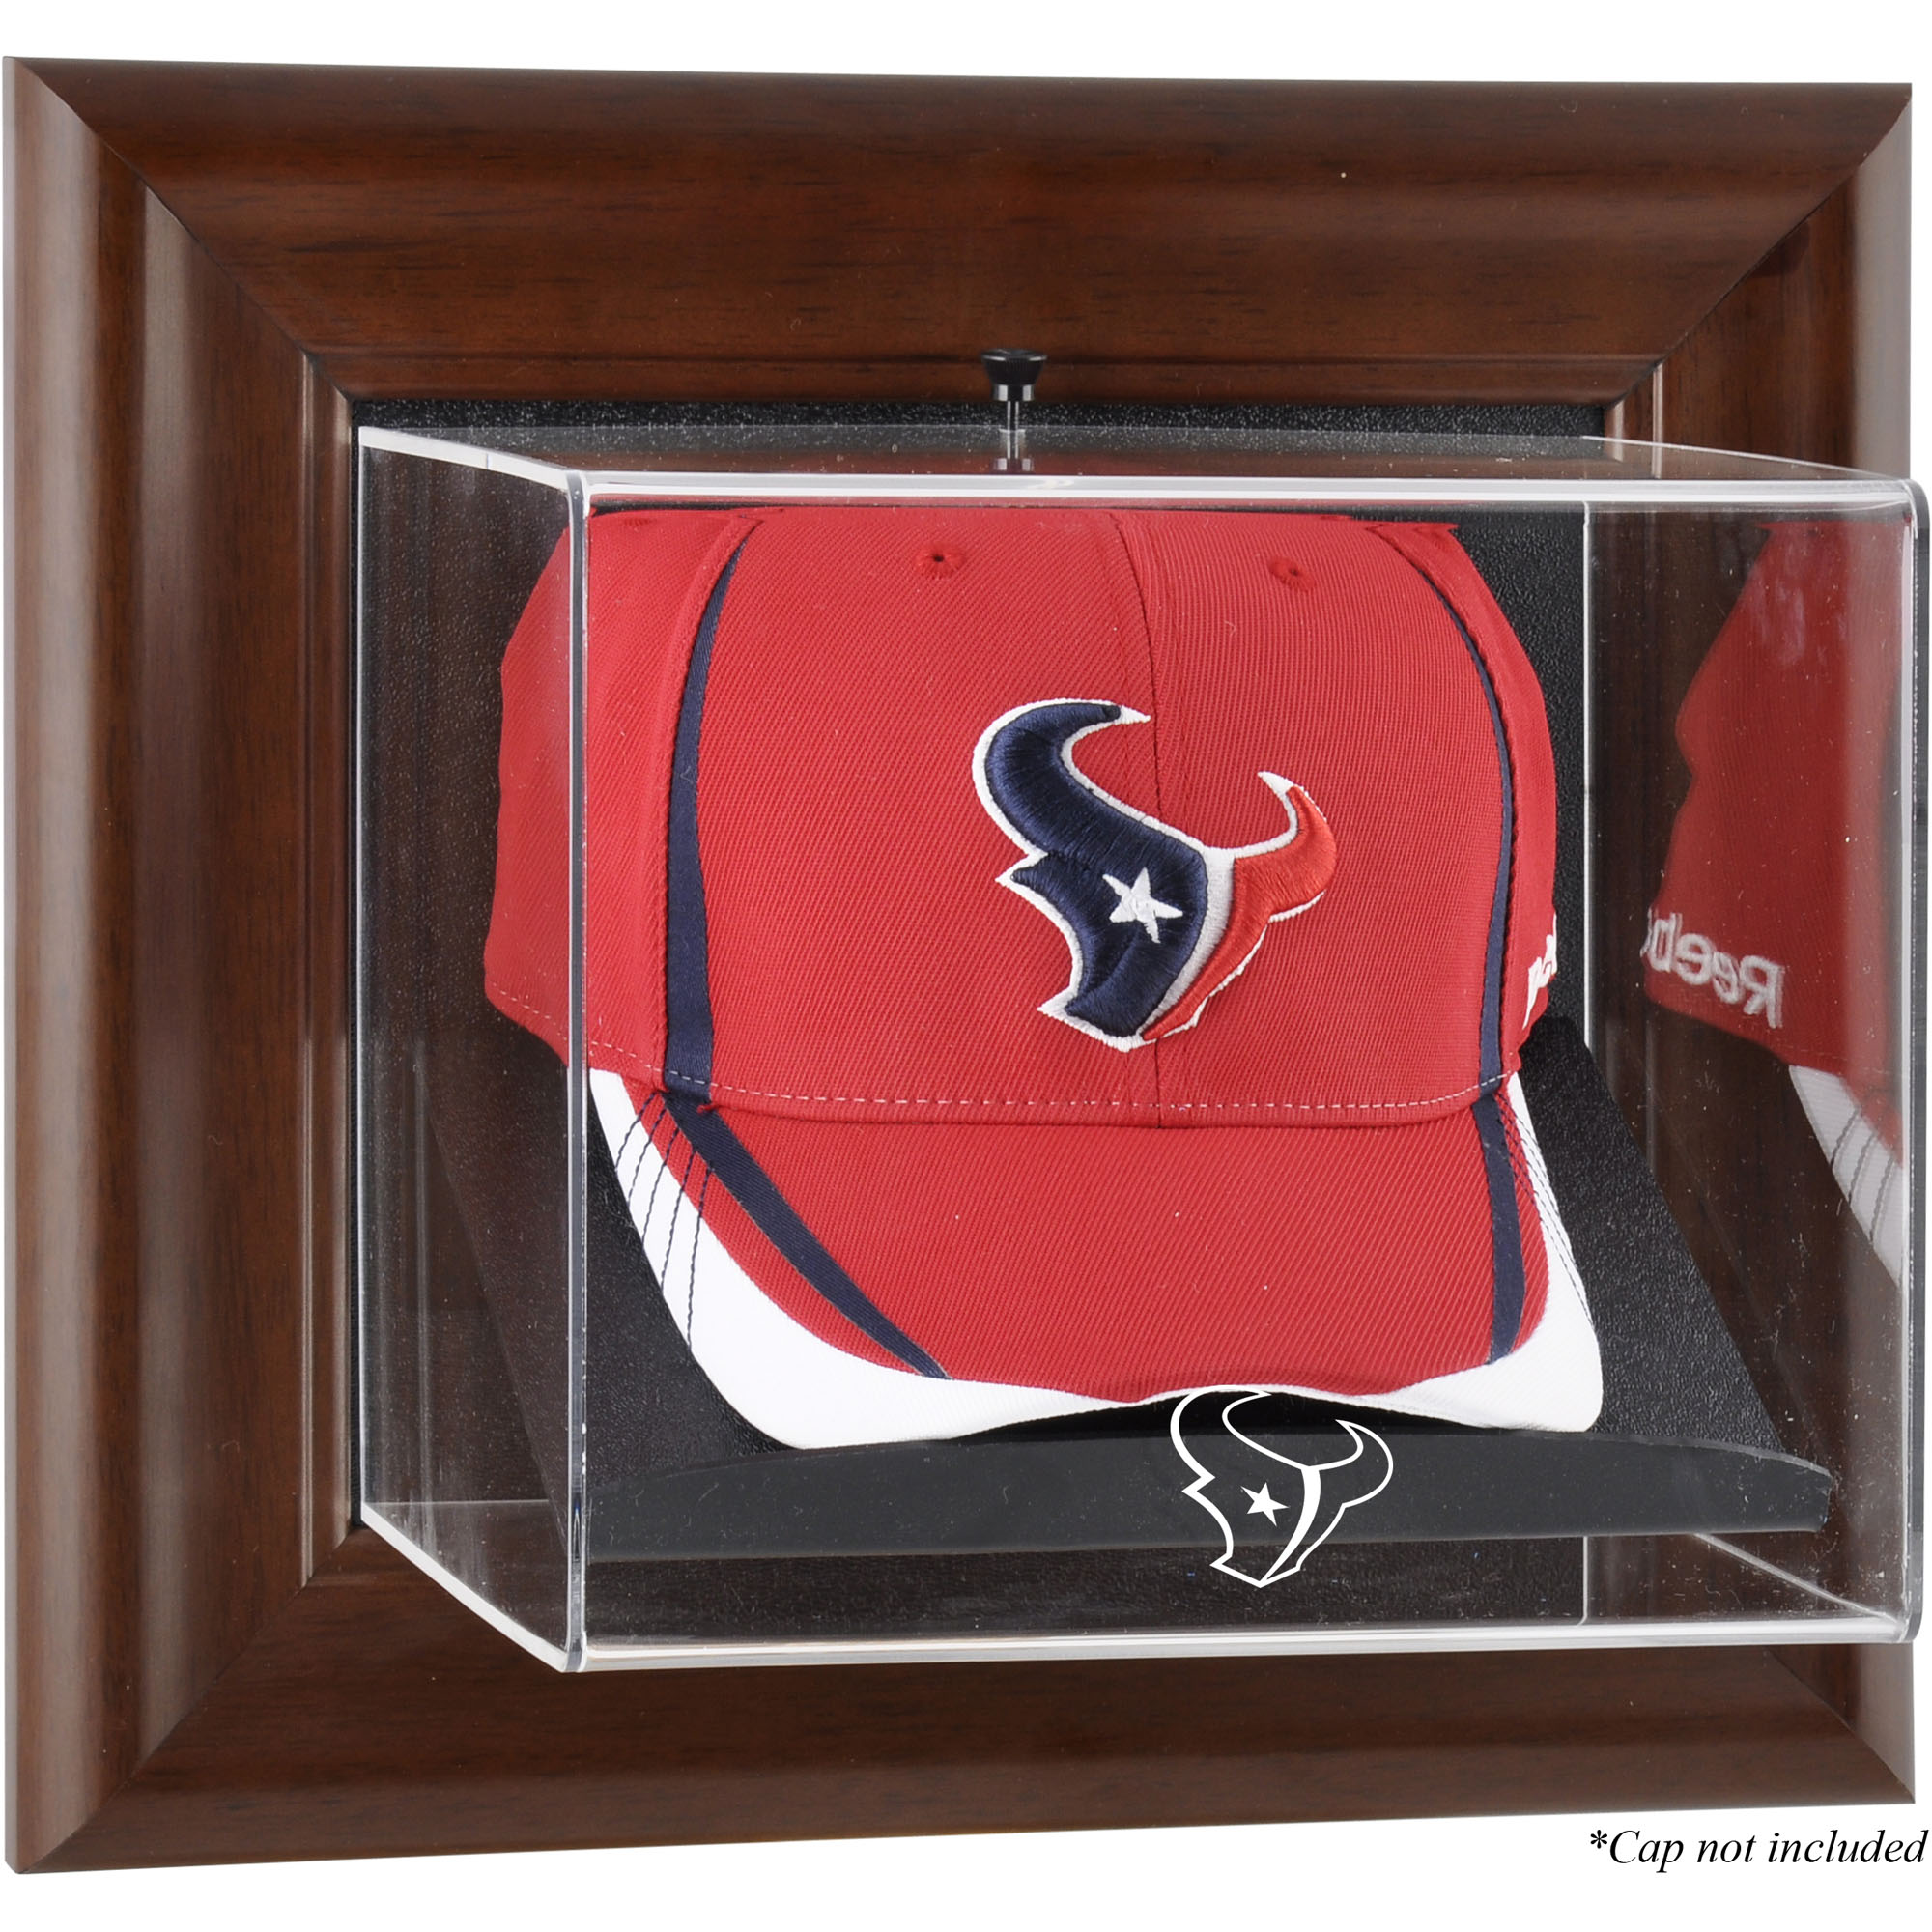 Wandmontierbare Baseballkappen-Vitrine der Houston Texans in Braun